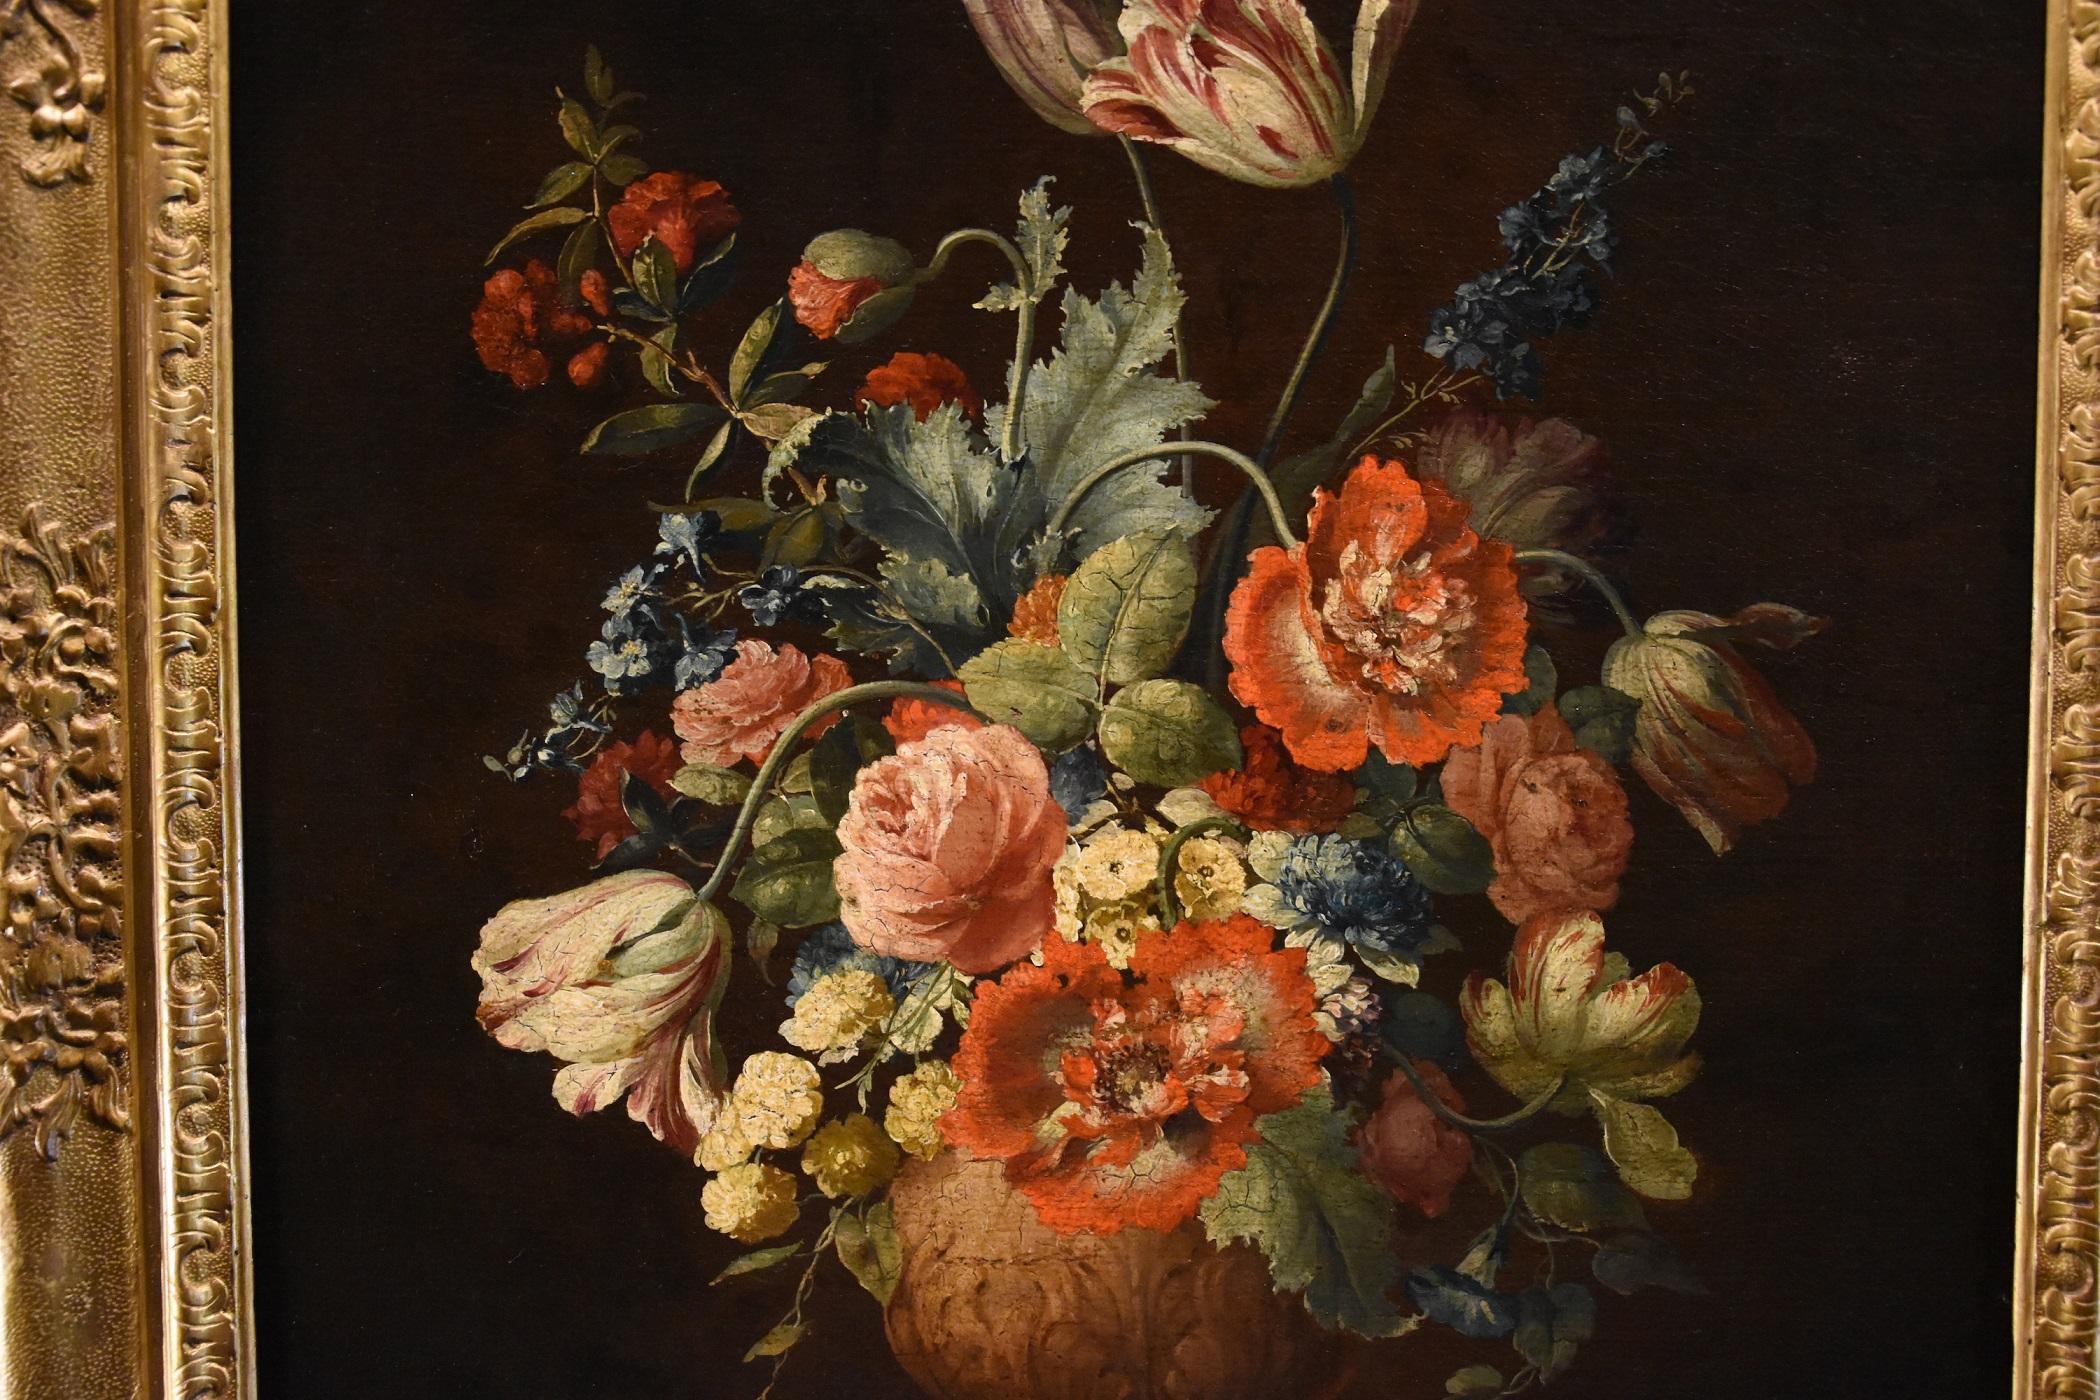 Still Life Flowers Van Huysum Paint Oil on canvas 18th Century Old master 2